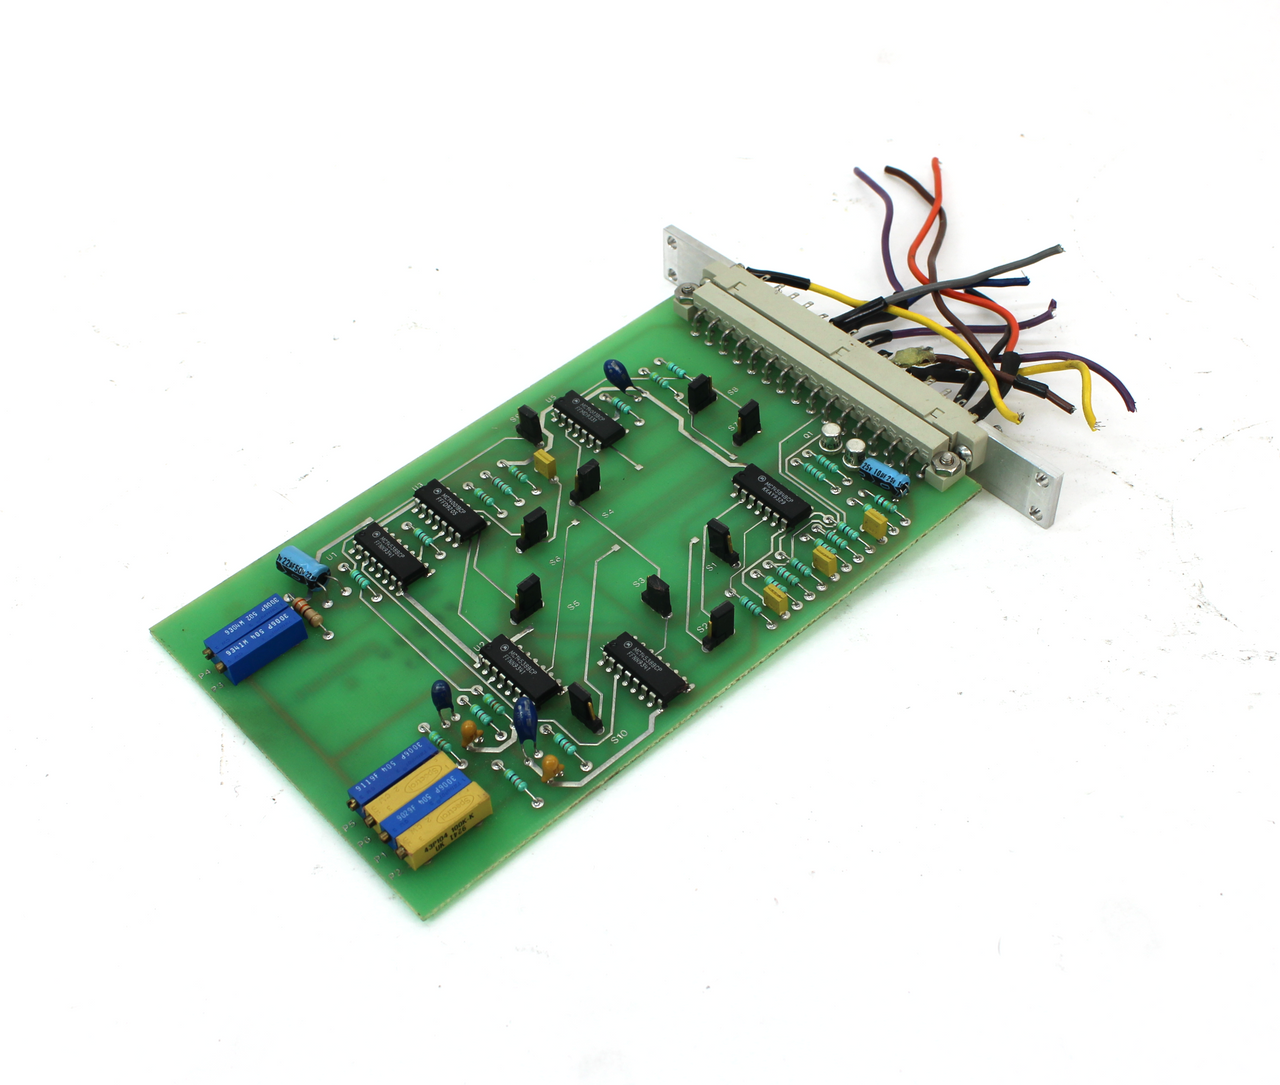 Durag EB05AM1 PCB Circuit Board